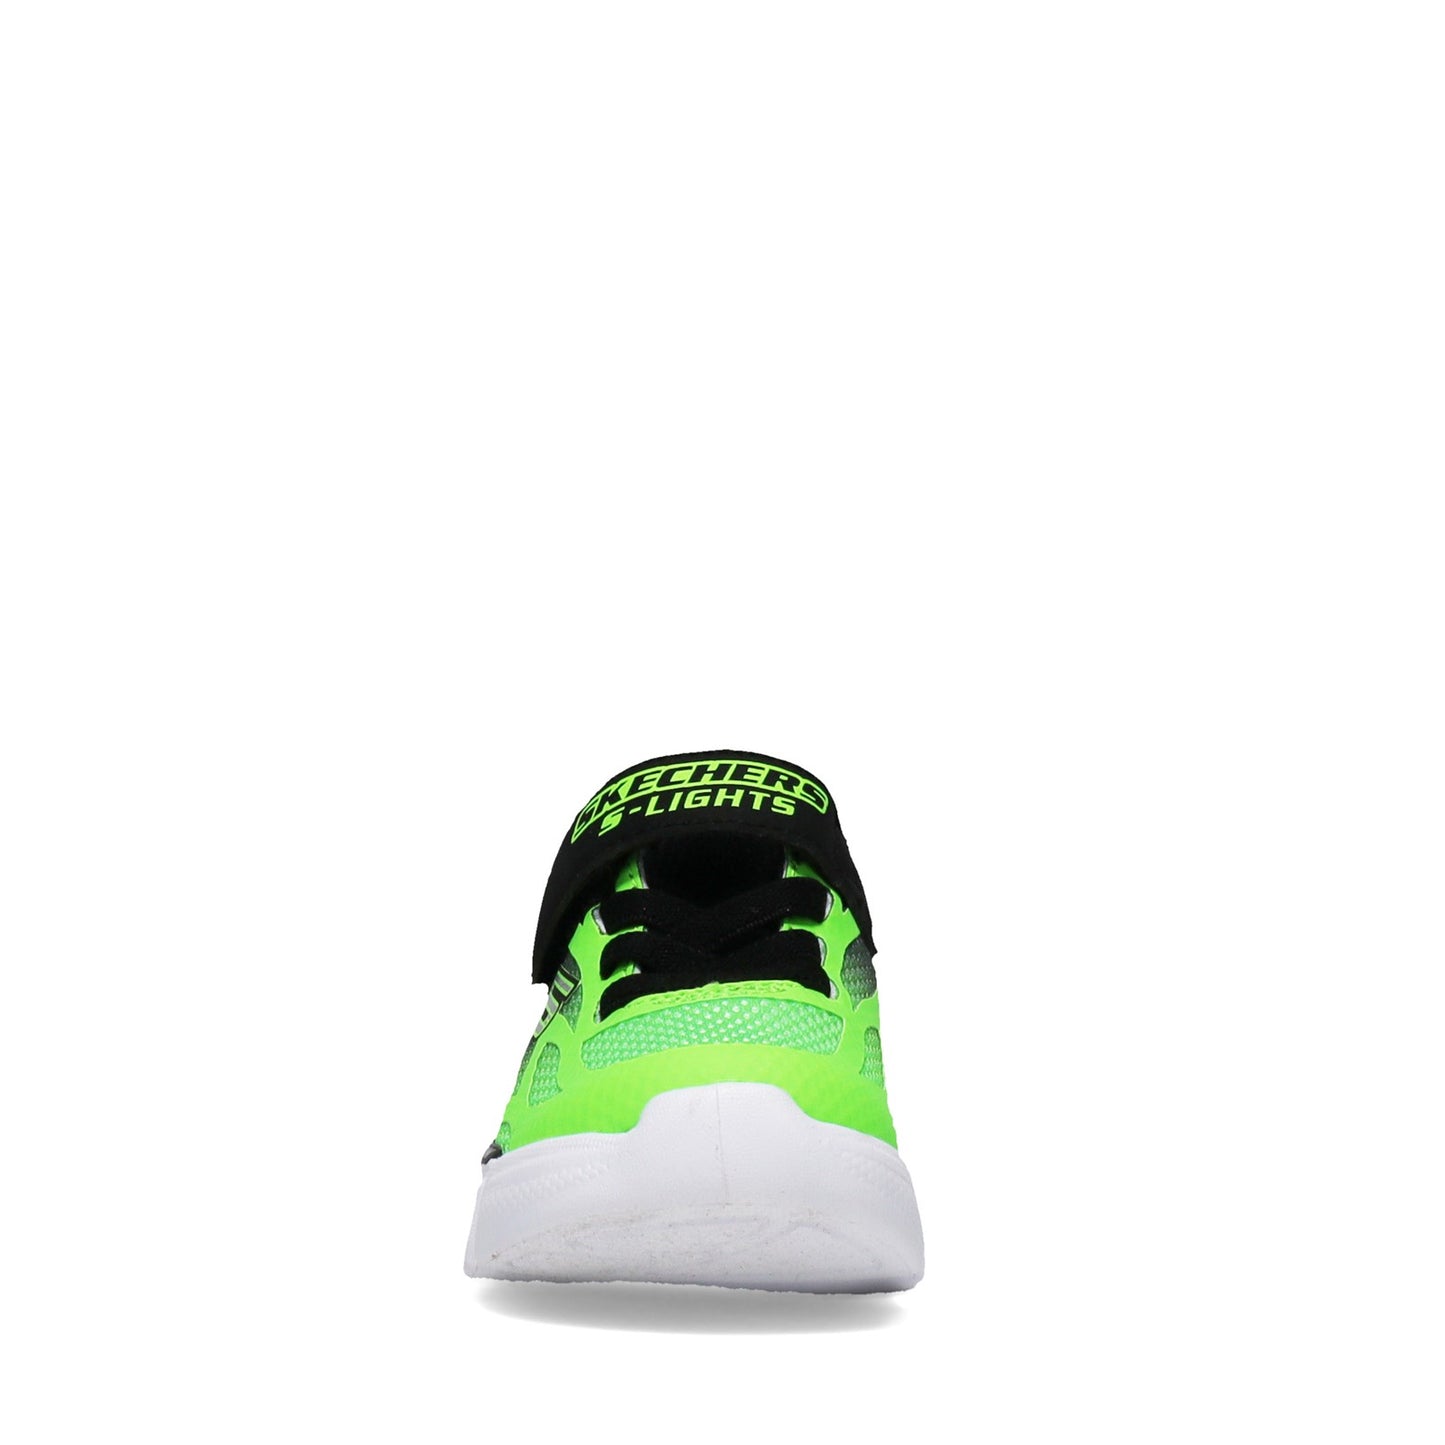 Peltz Shoes  Boy's Skechers S Lights Flex - Glow Sneaker - Toddler Lime/Black 400016N-LMBK